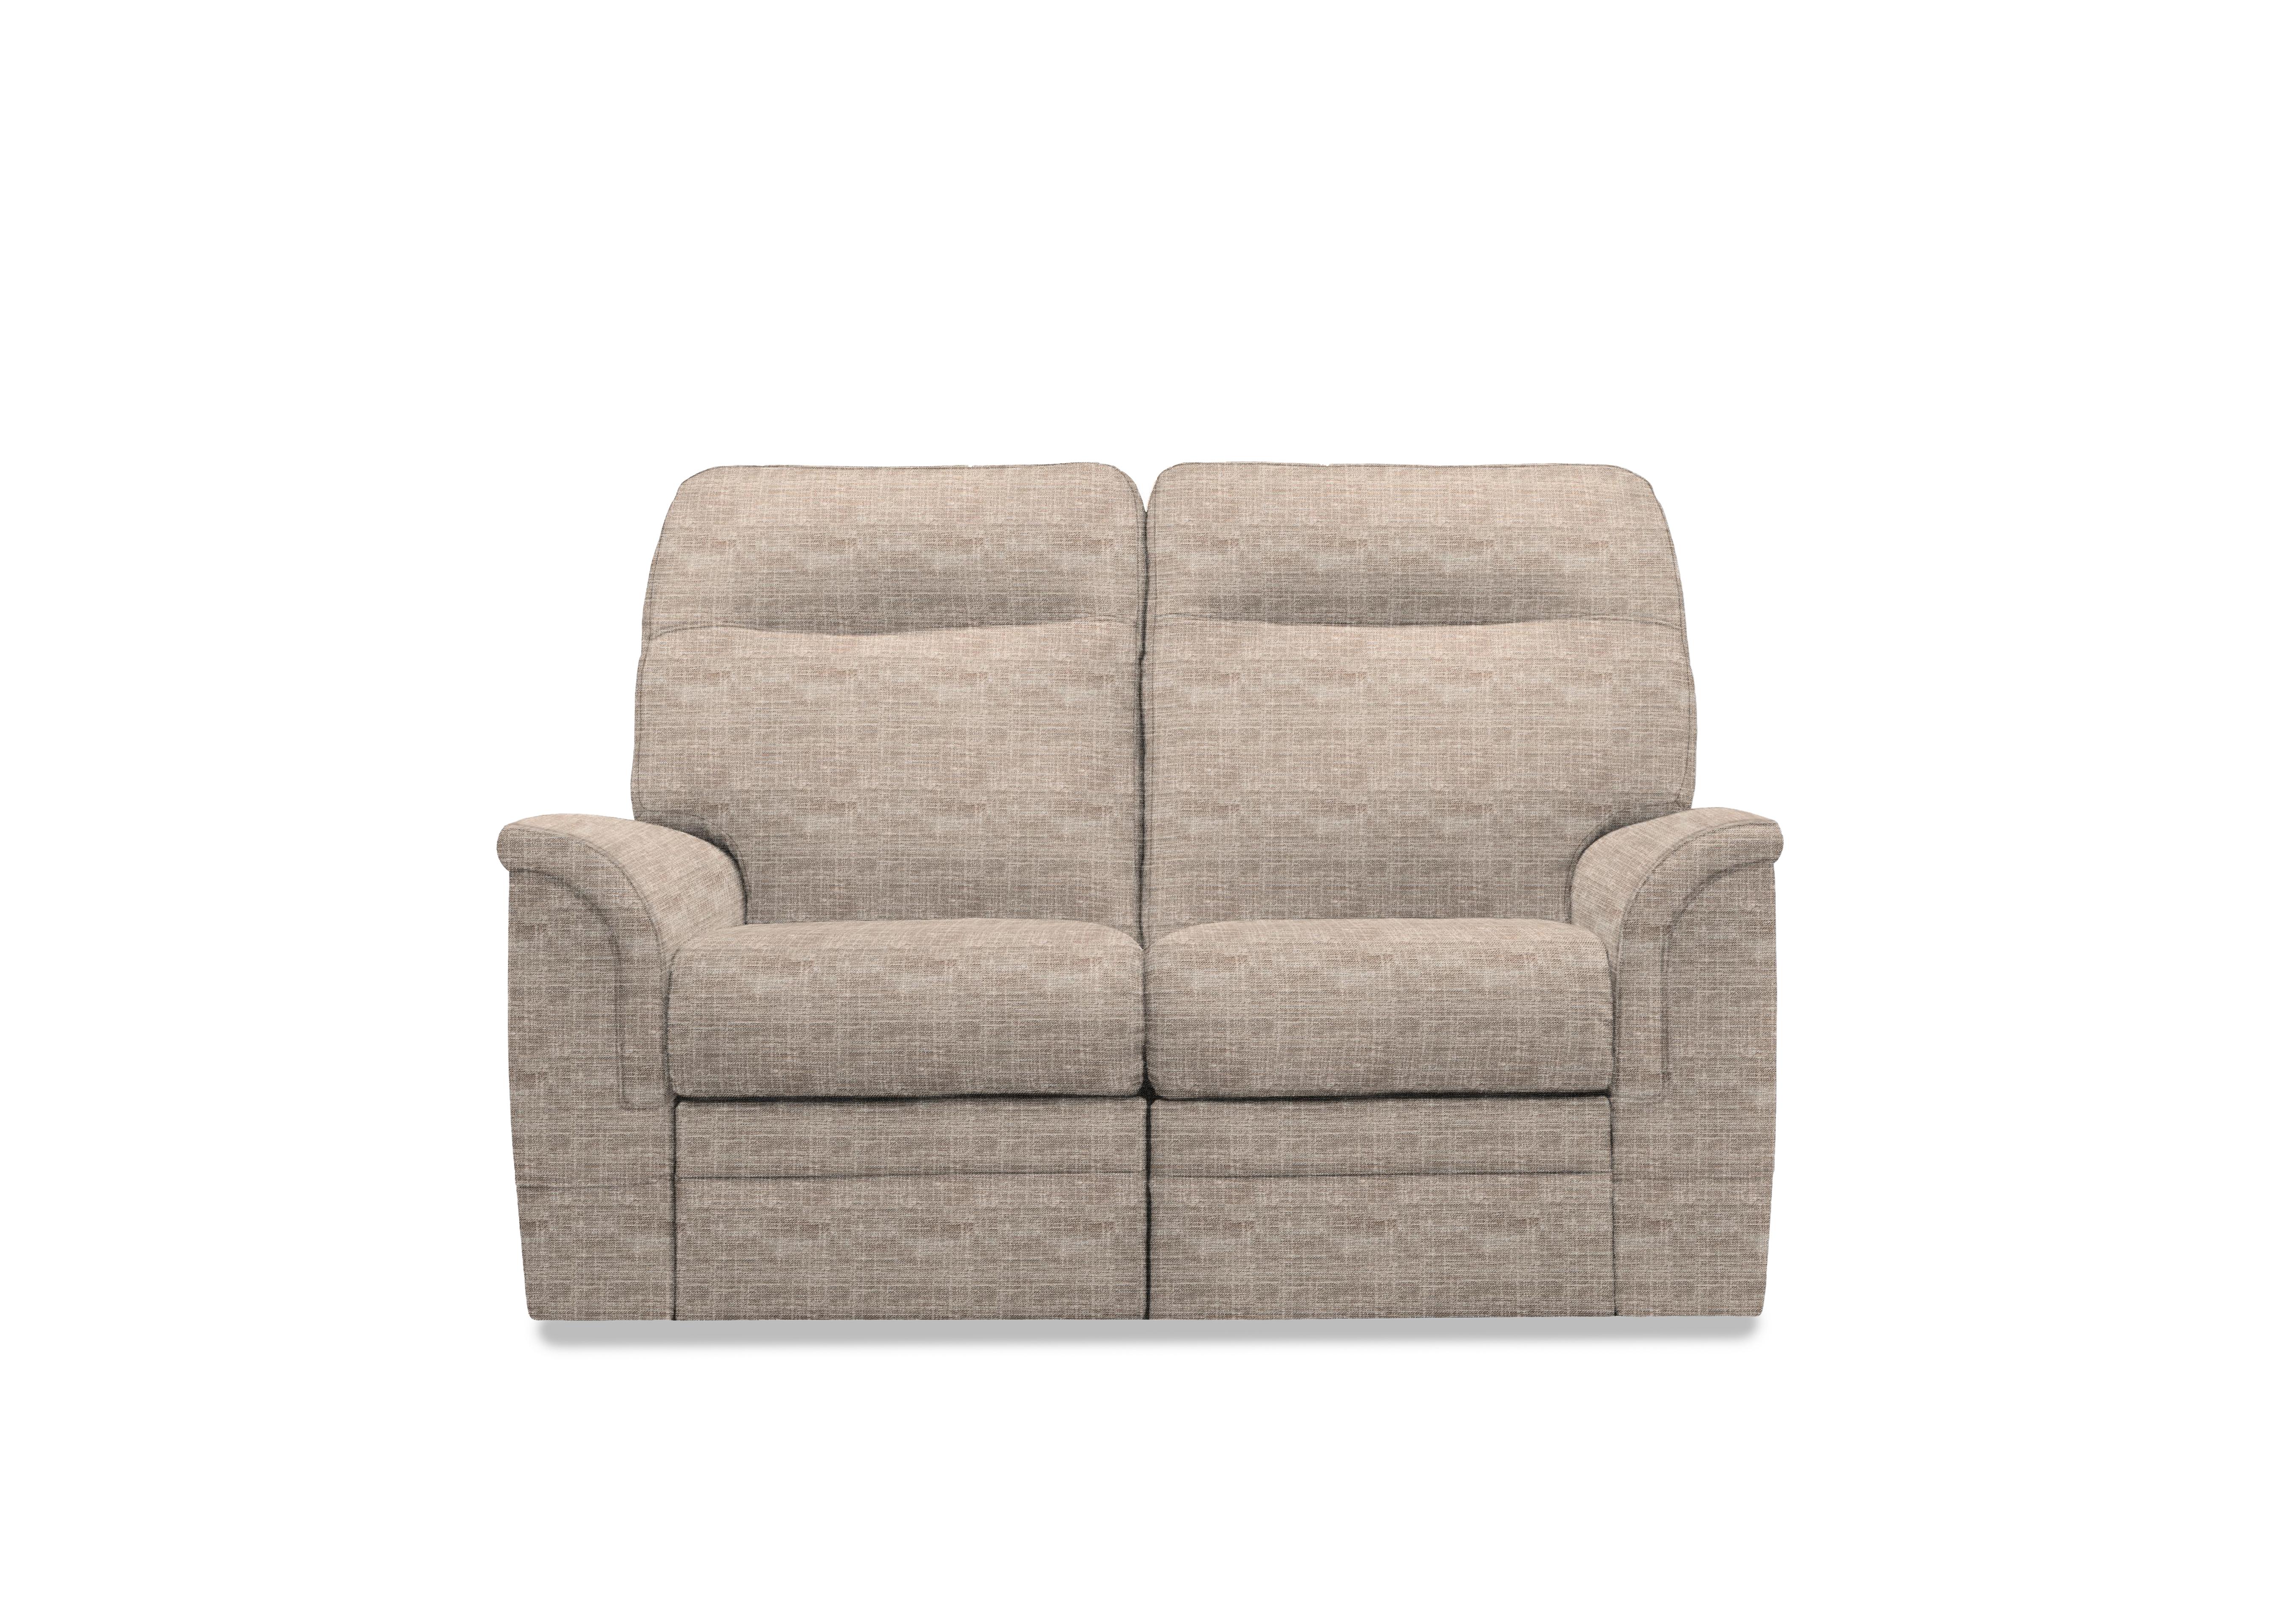 Hudson 23 Fabric 2 Seater Sofa in Dash Oatmeal 001497-0051 on Furniture Village